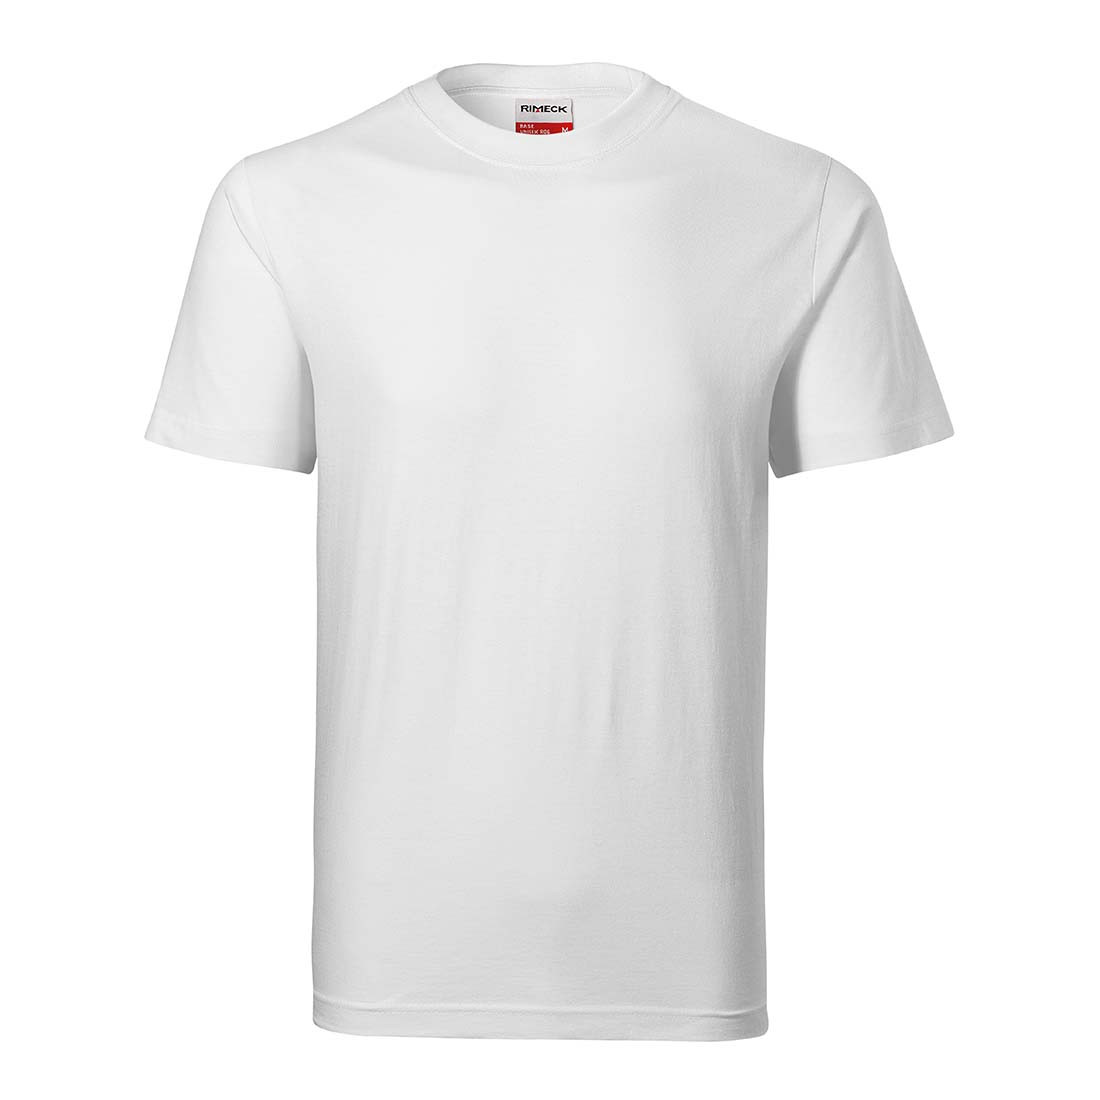 BASE Unisex T-shirt - Safetywear